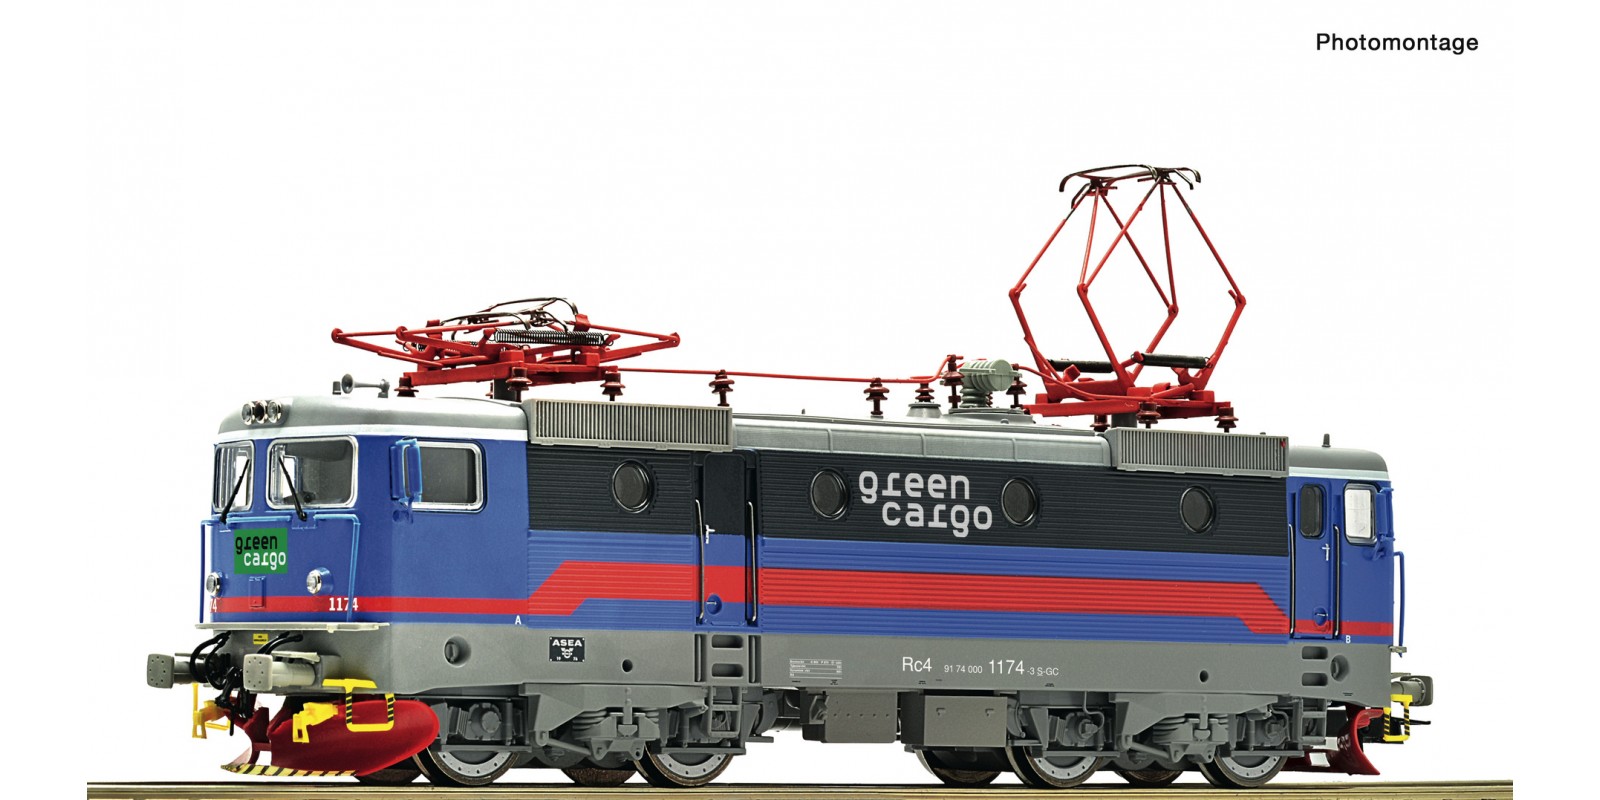 RO78458 Electric locomotive Rc4 1174, Green Cargo